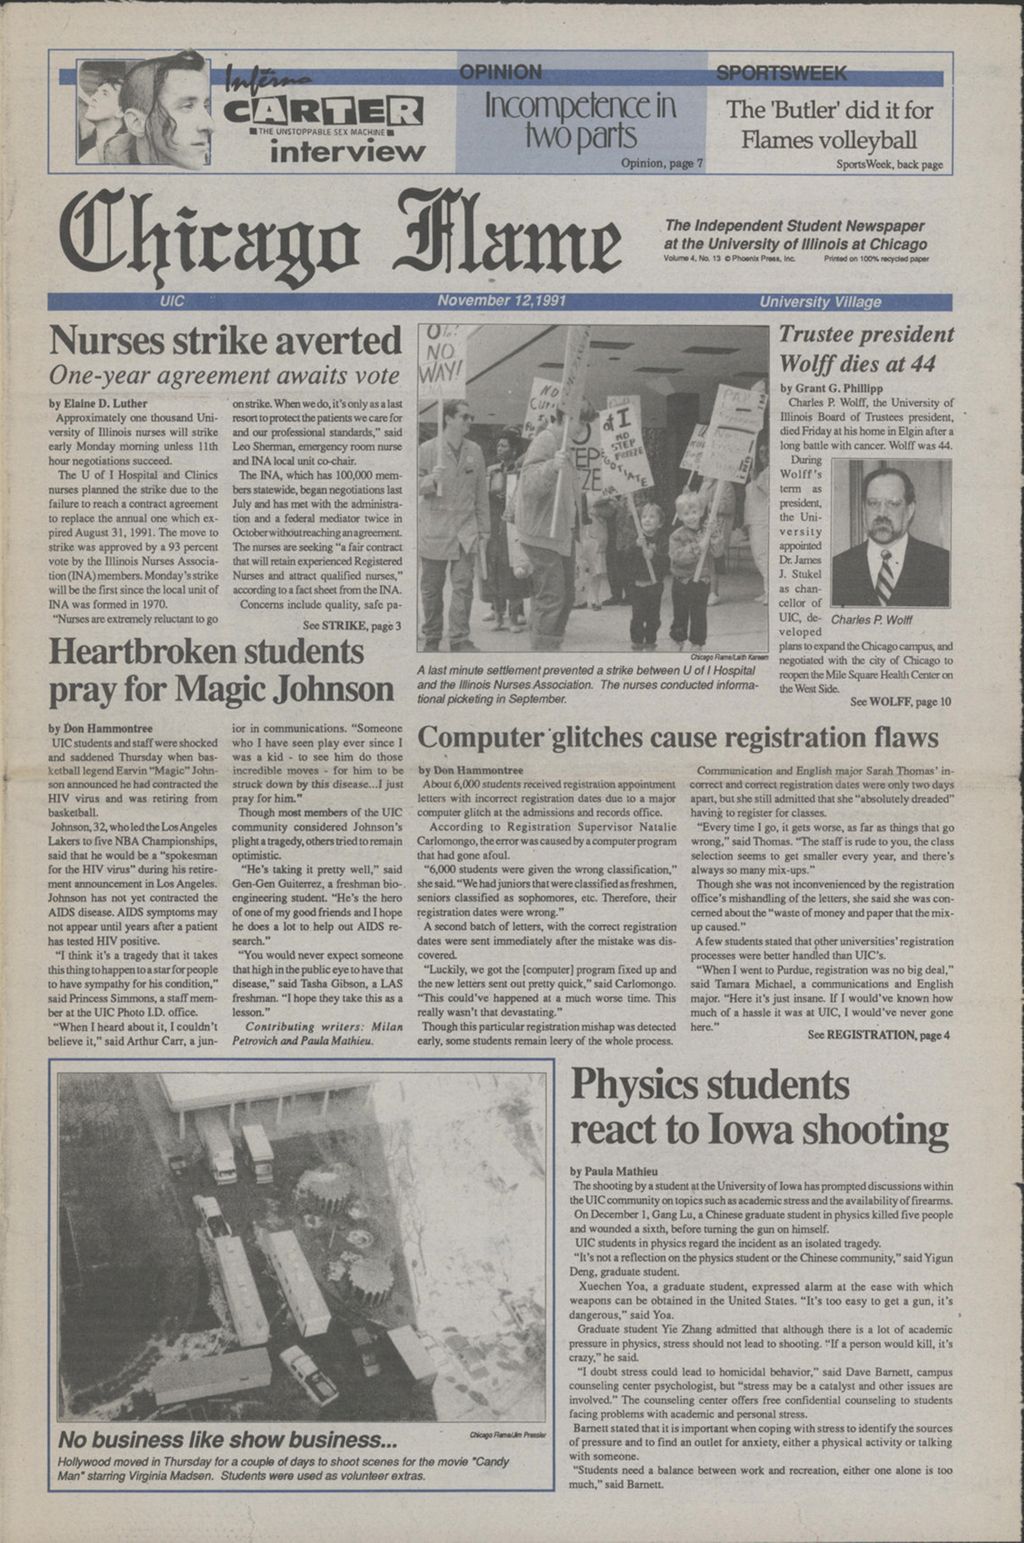 Chicago Flame (November 12, 1991)